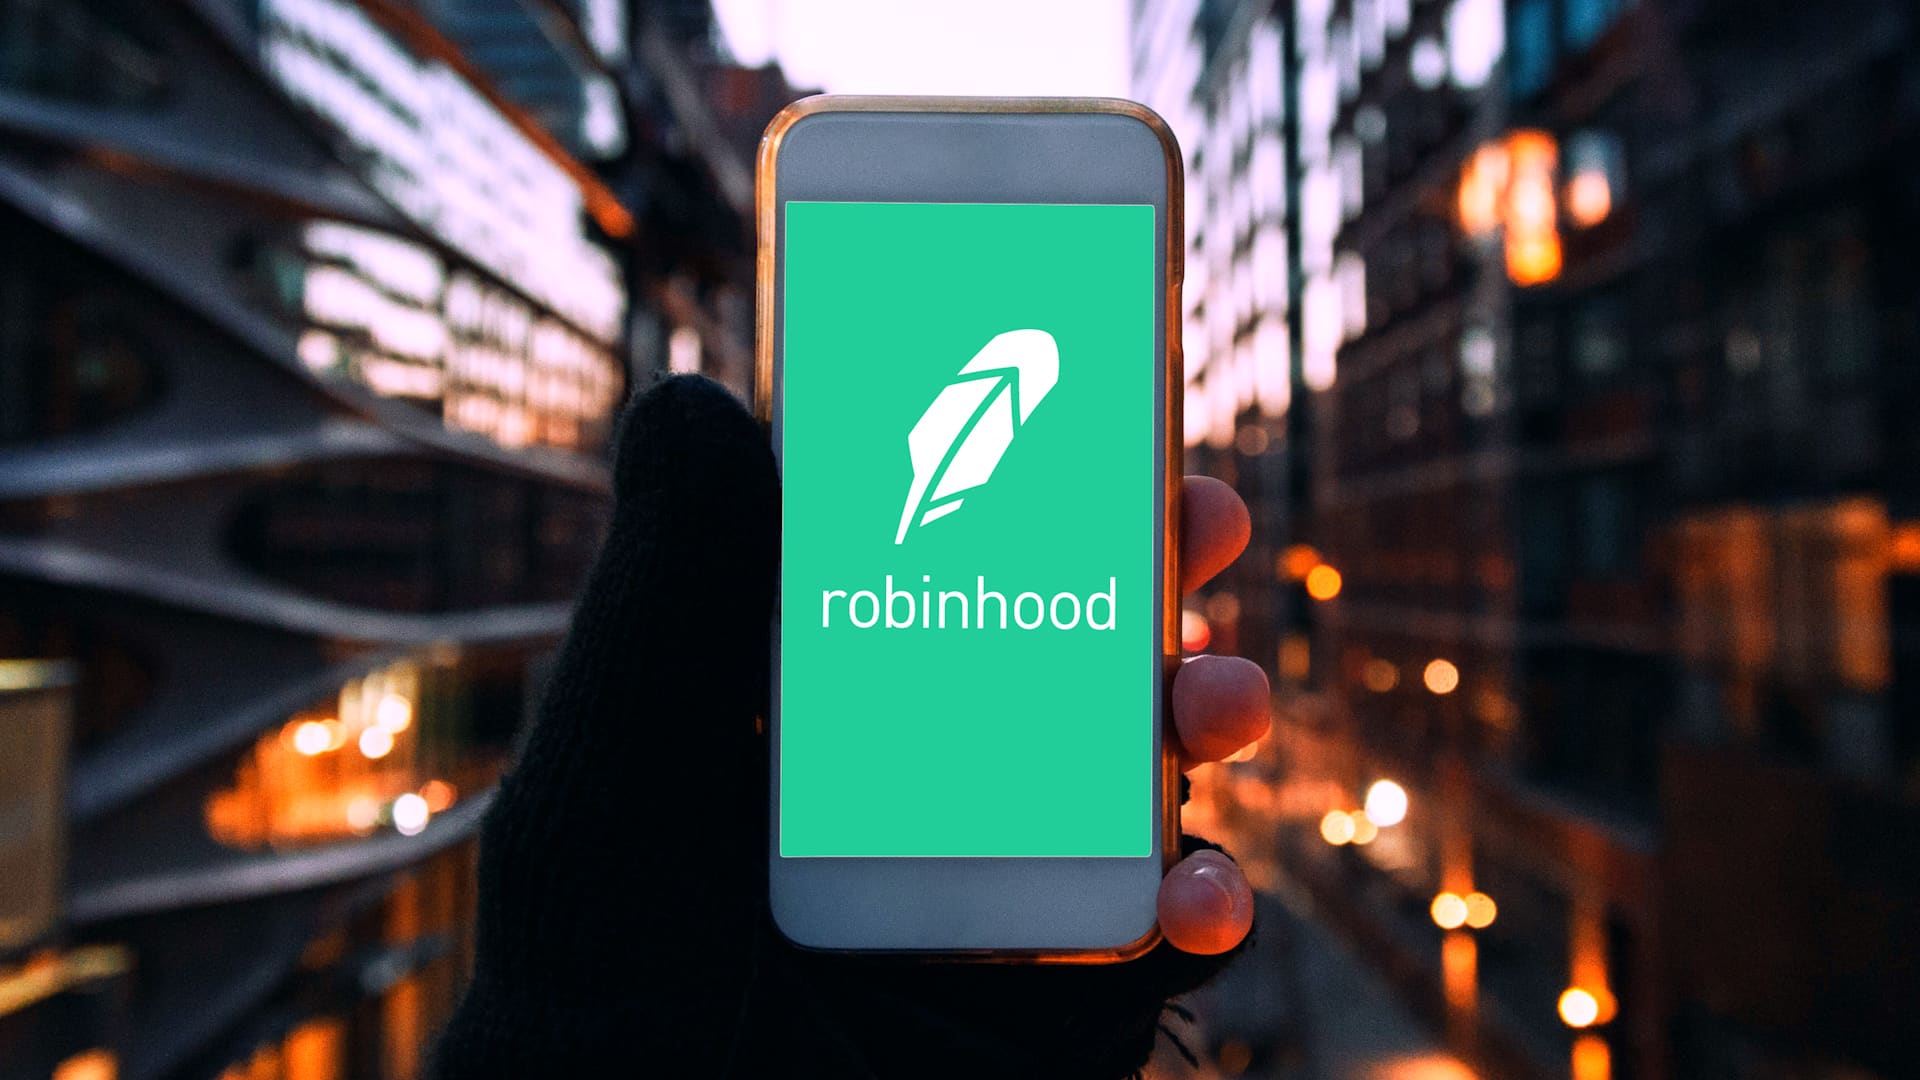 robinhood app customer service